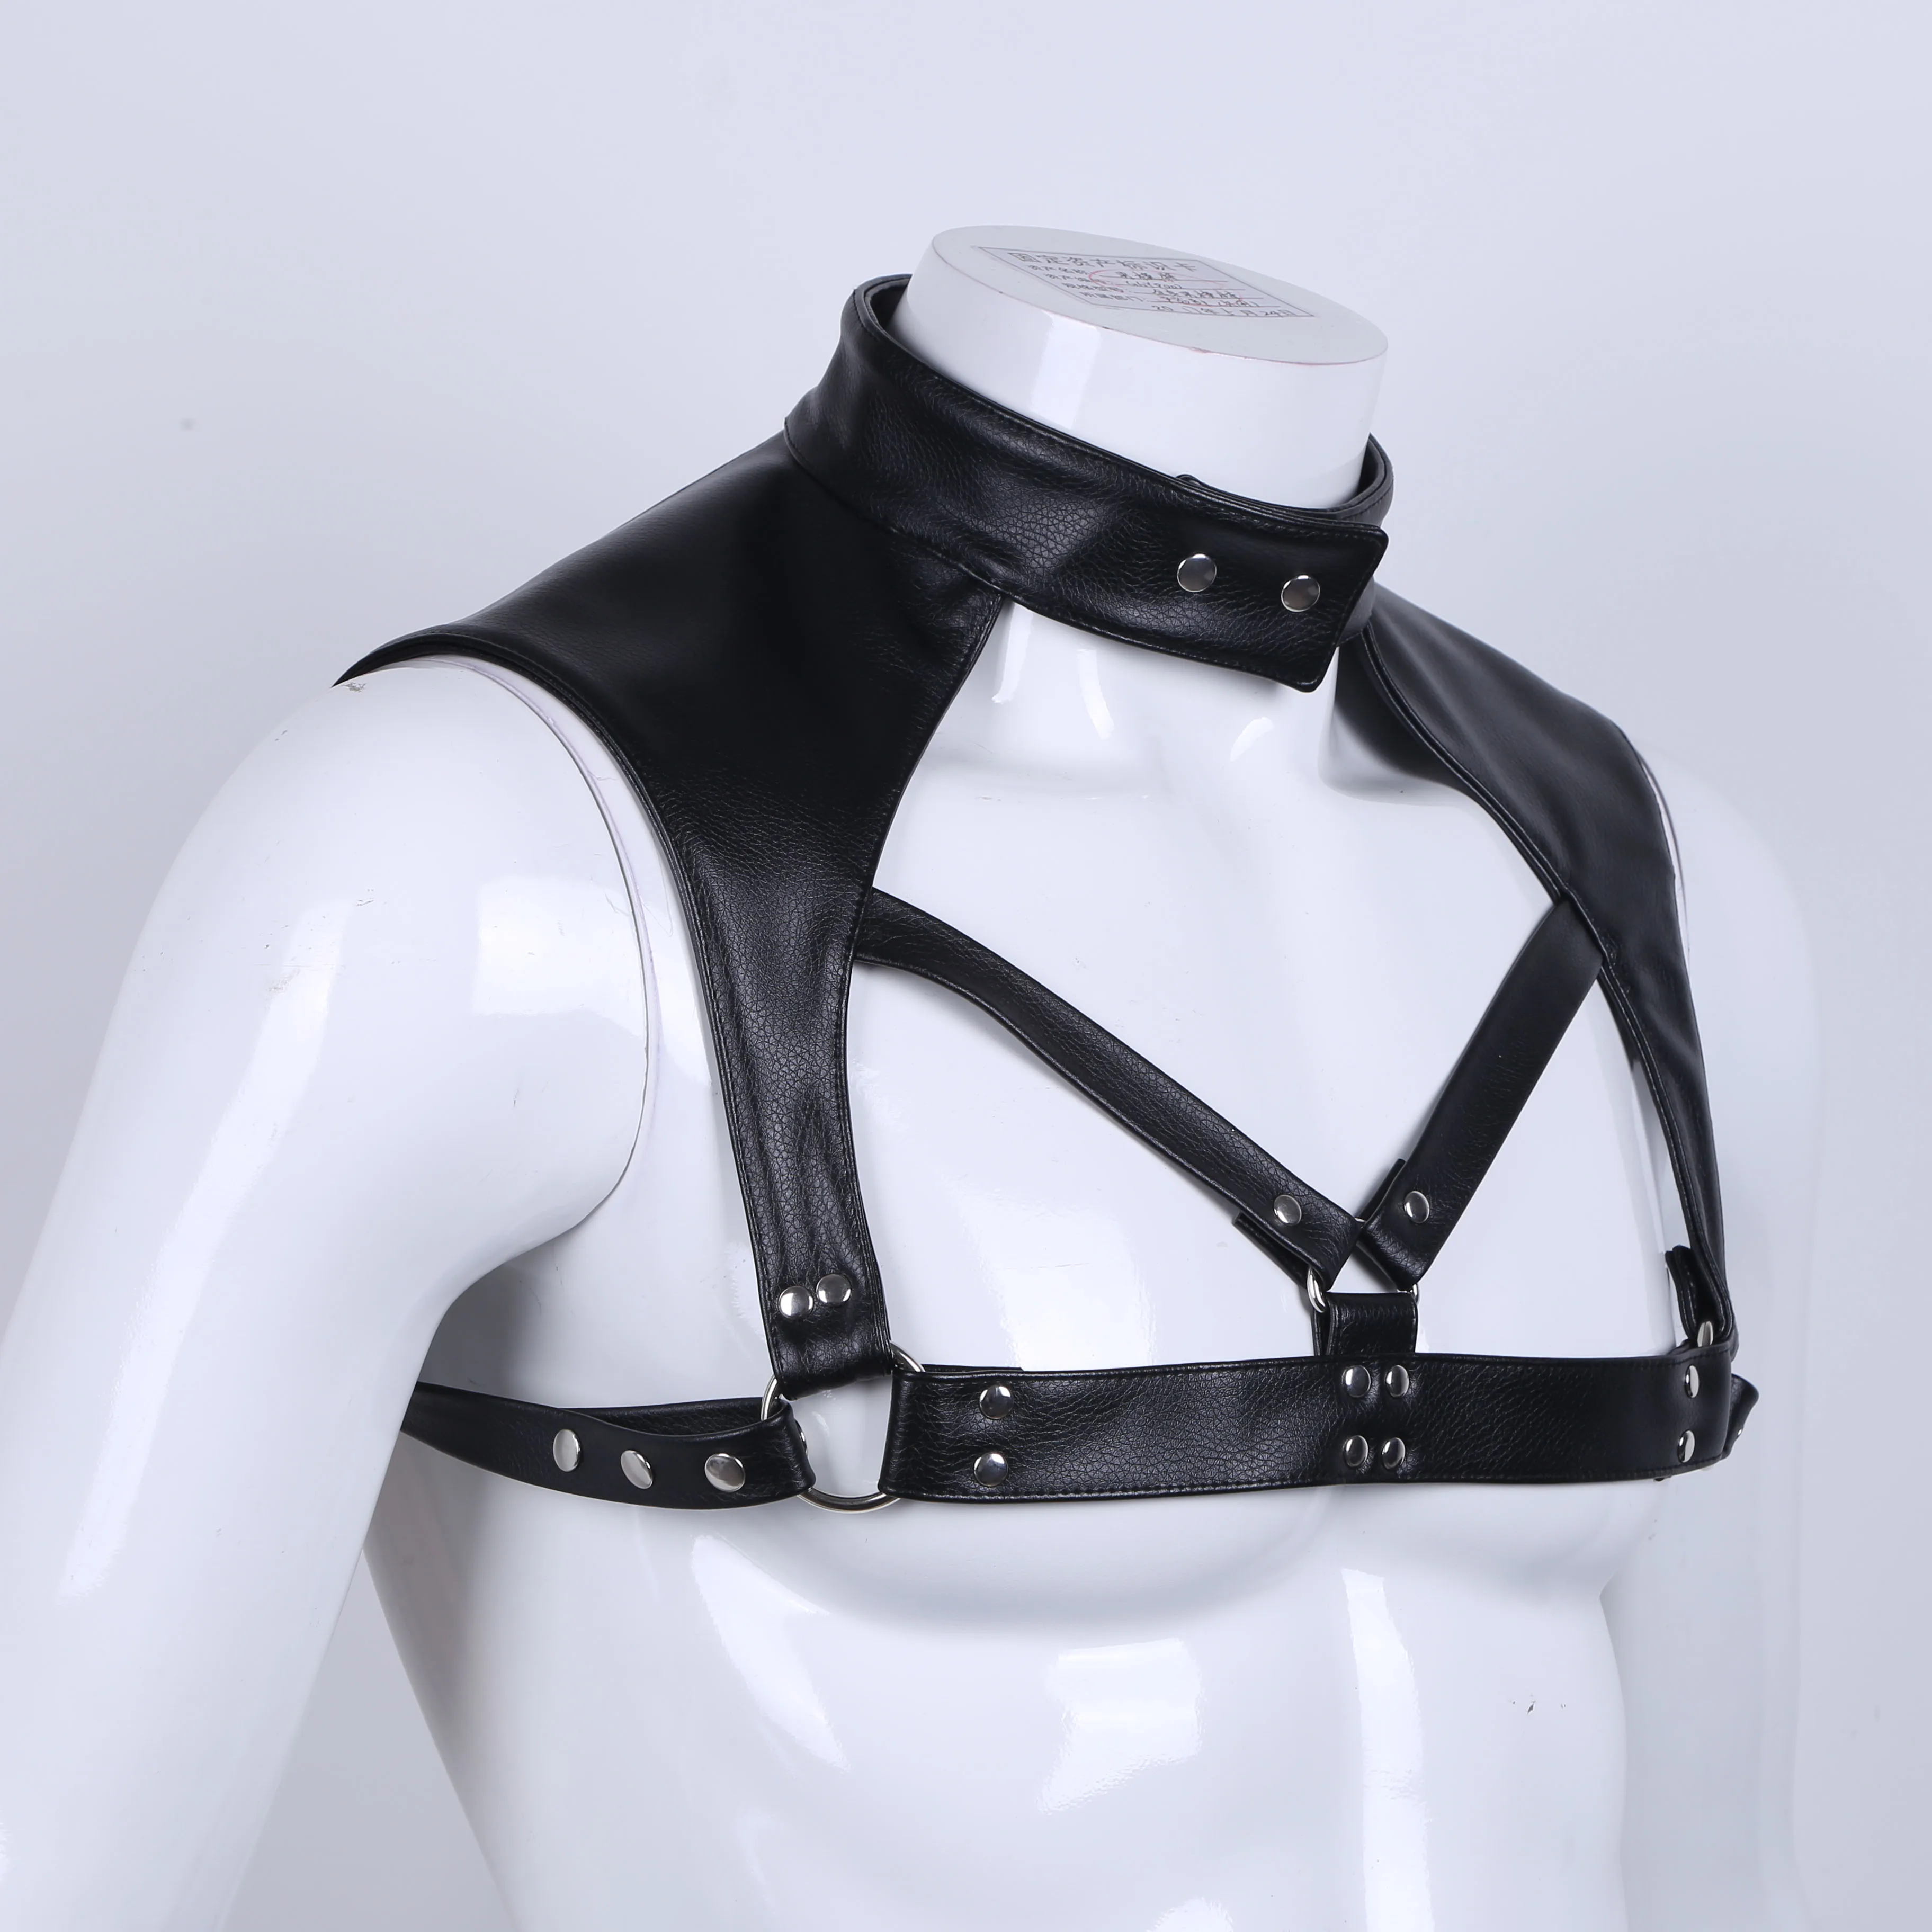 bust silver hardware bdsm Antracid black elegant upper body kink wear high quality leather harness